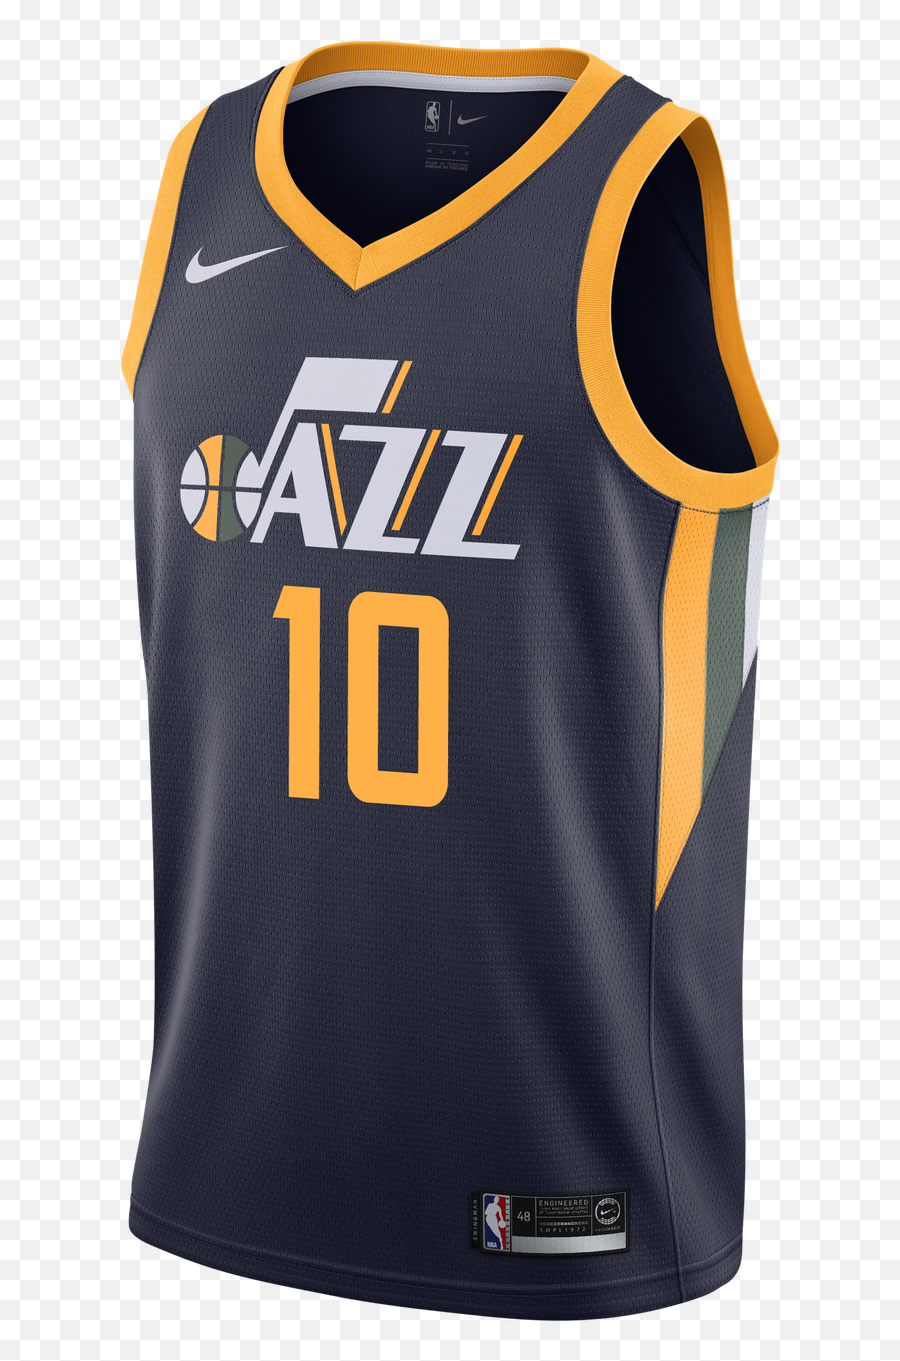 Utah Jazz Png Nike Icon 2 In 1